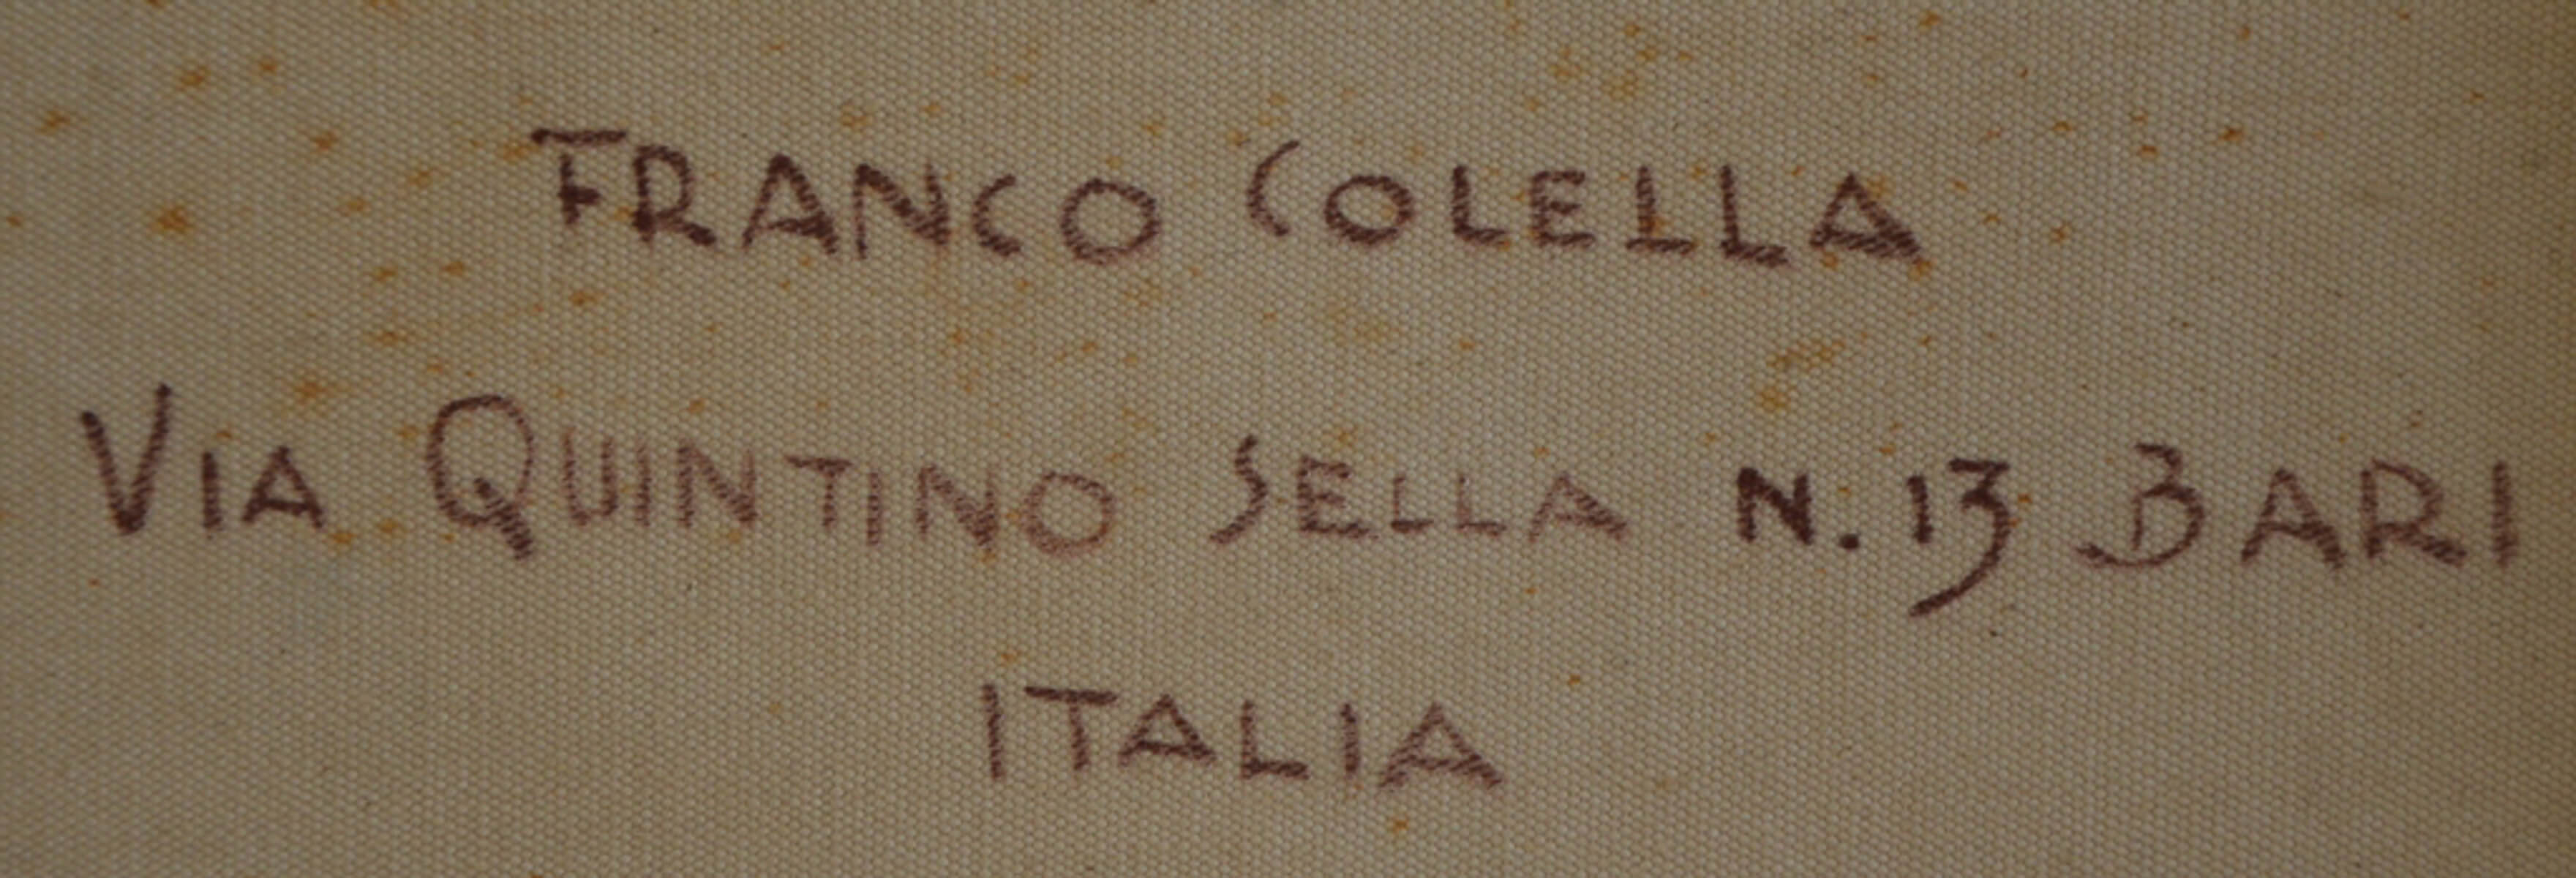 Franco COLELLA (1900-1981) Italian - American